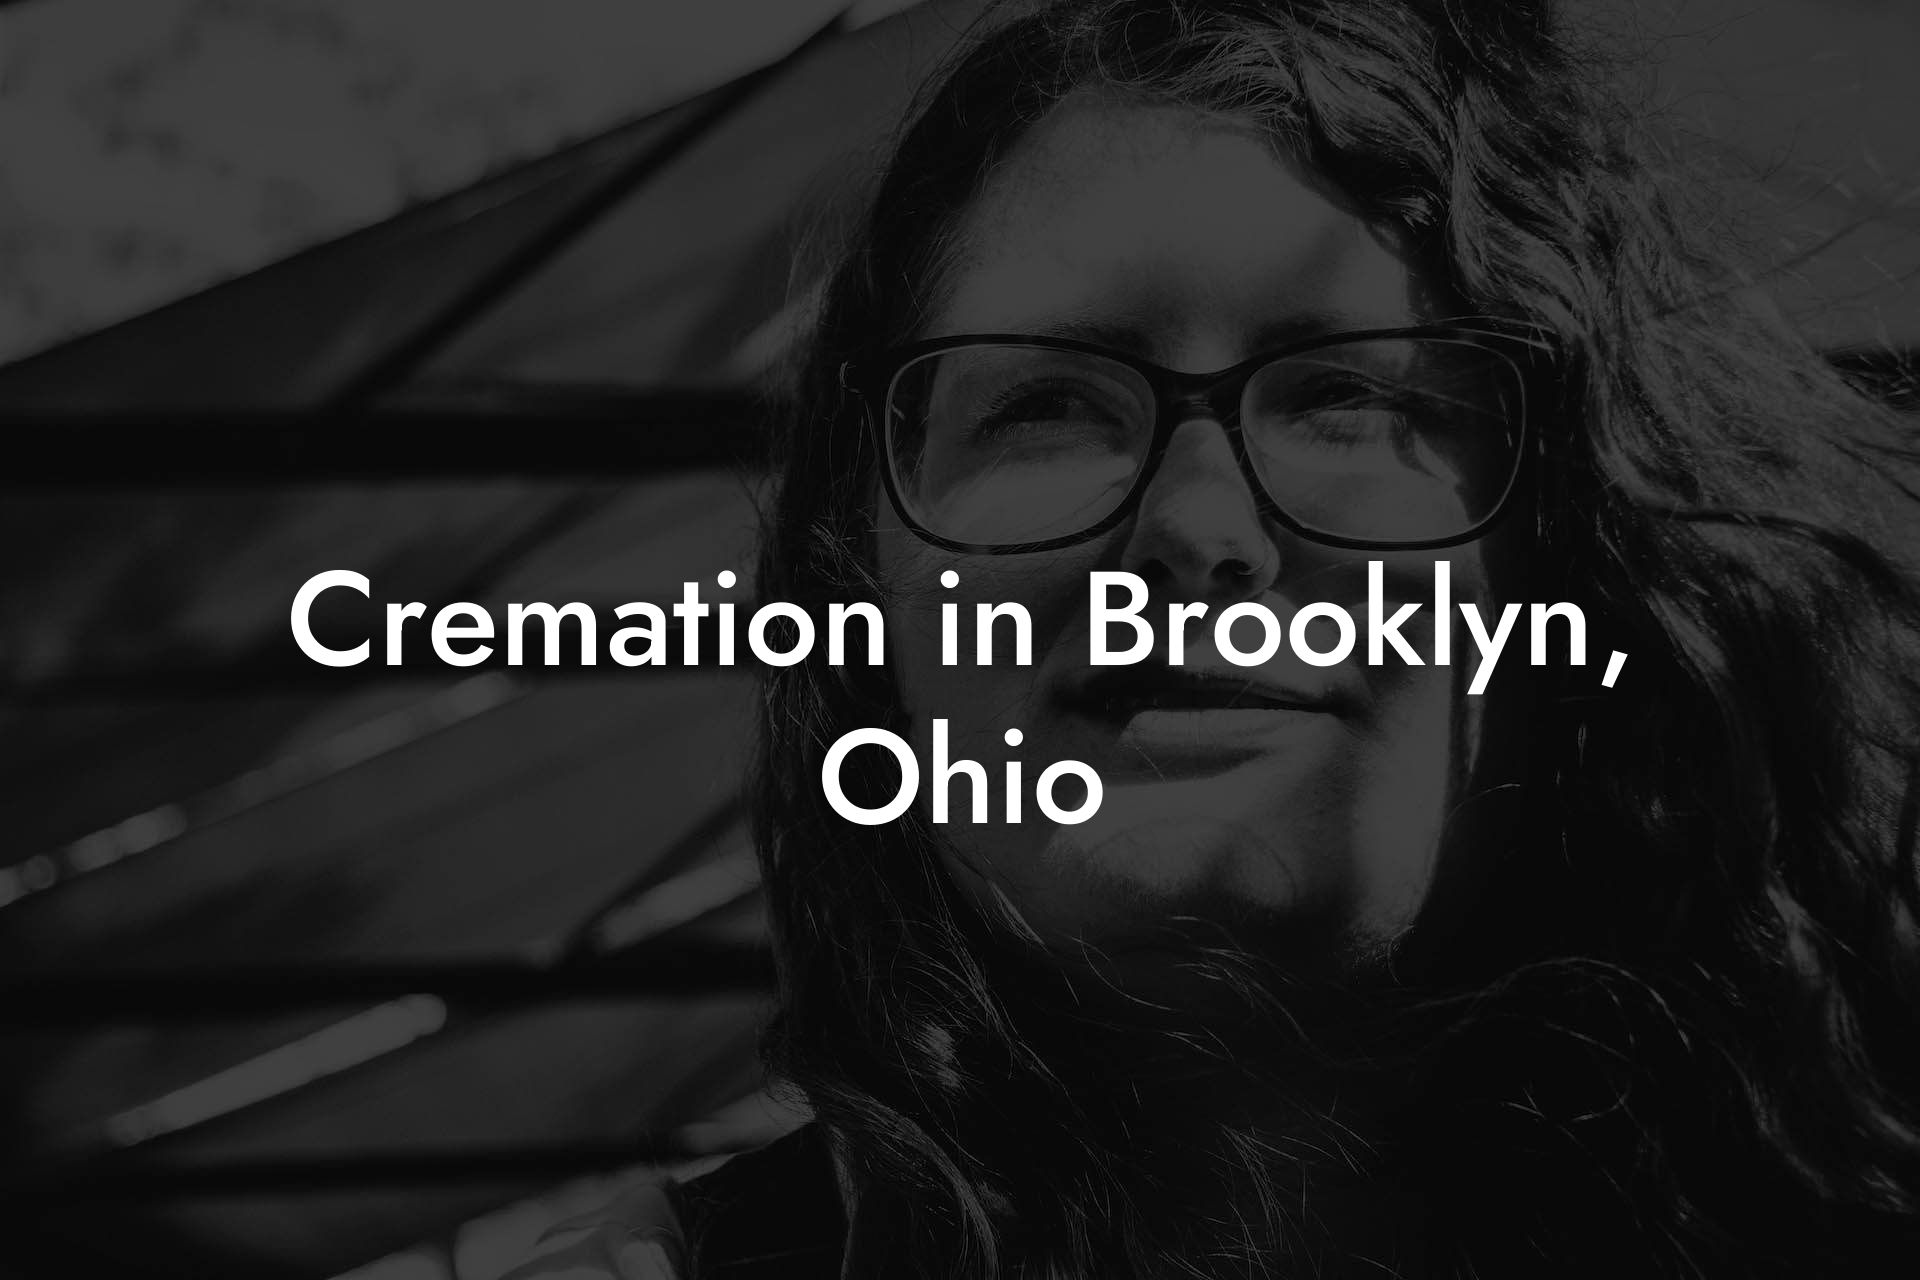 Cremation in Brooklyn, Ohio